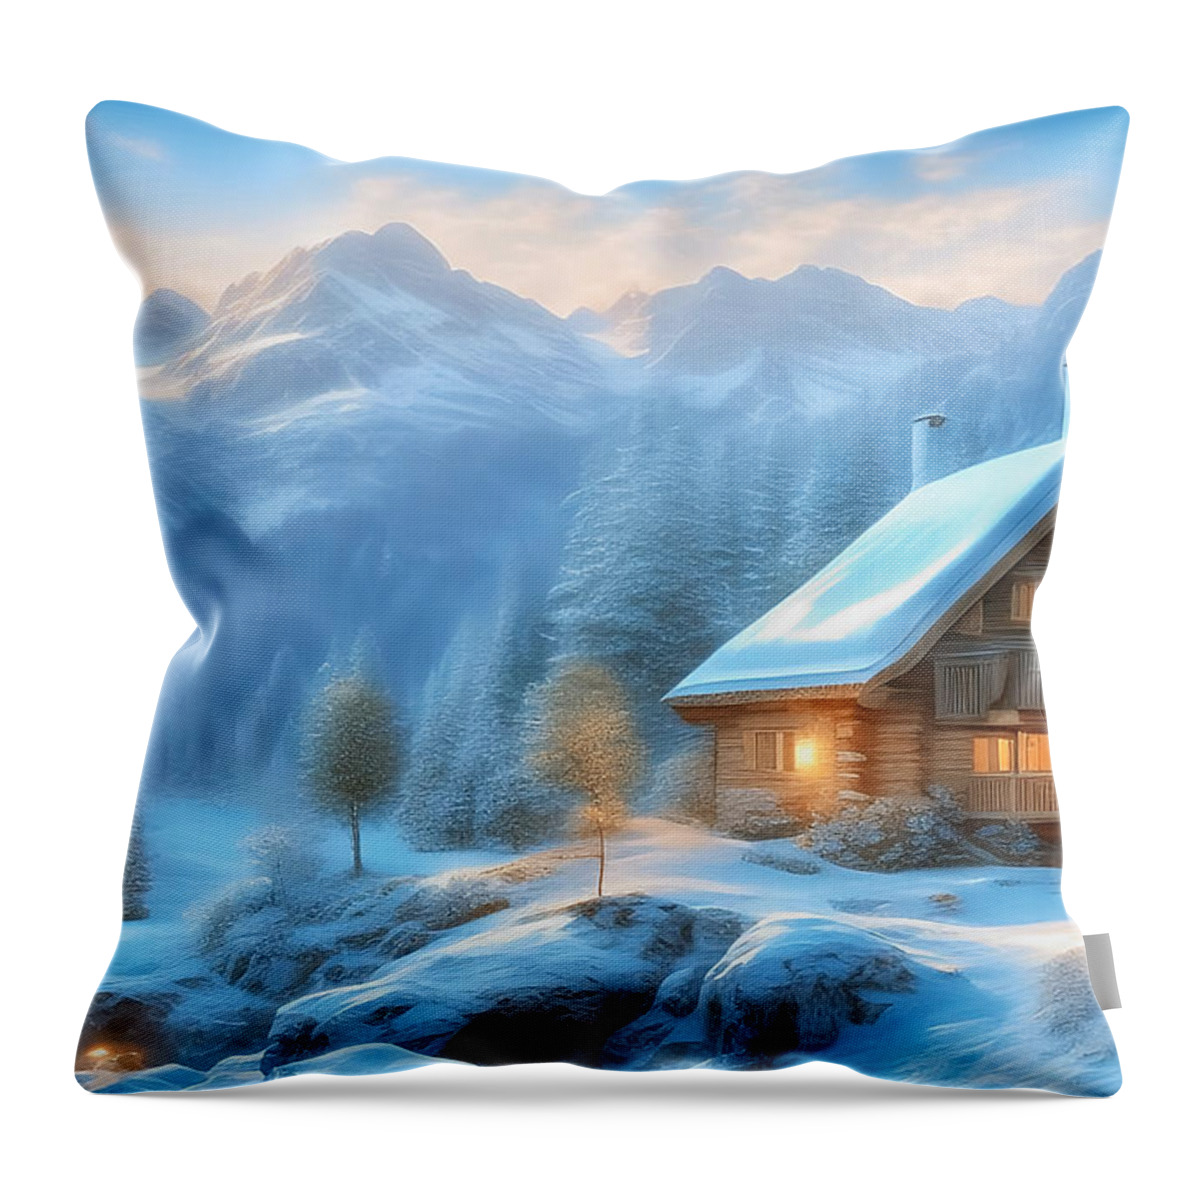 Swiss Throw Pillow featuring the digital art Swiss Landscape by Manjik Pictures